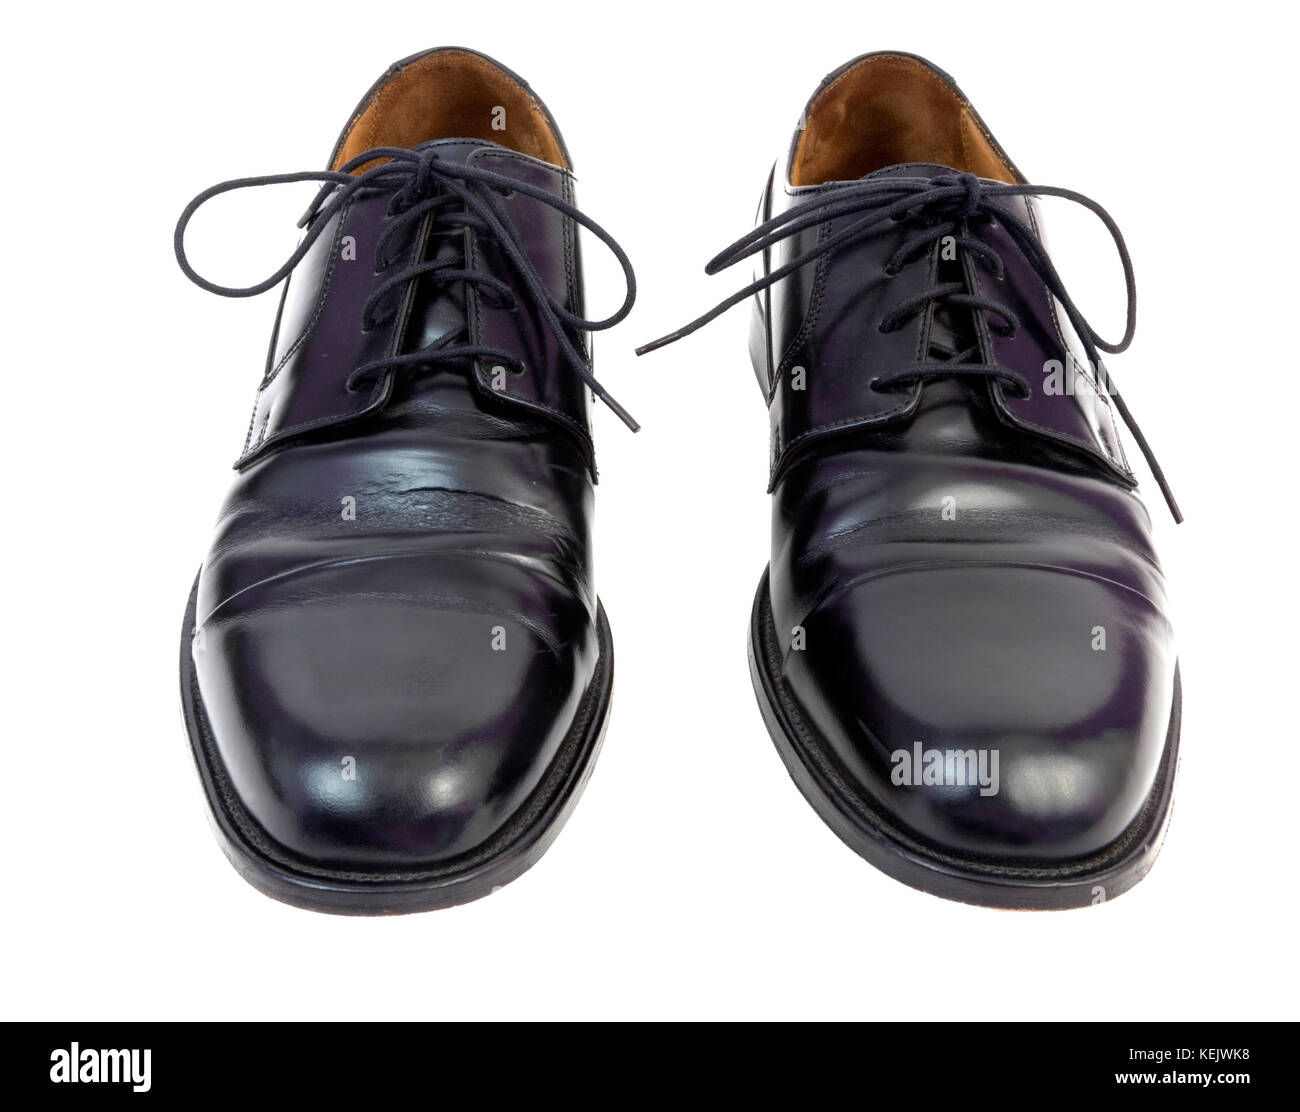 shiny black leather shoes